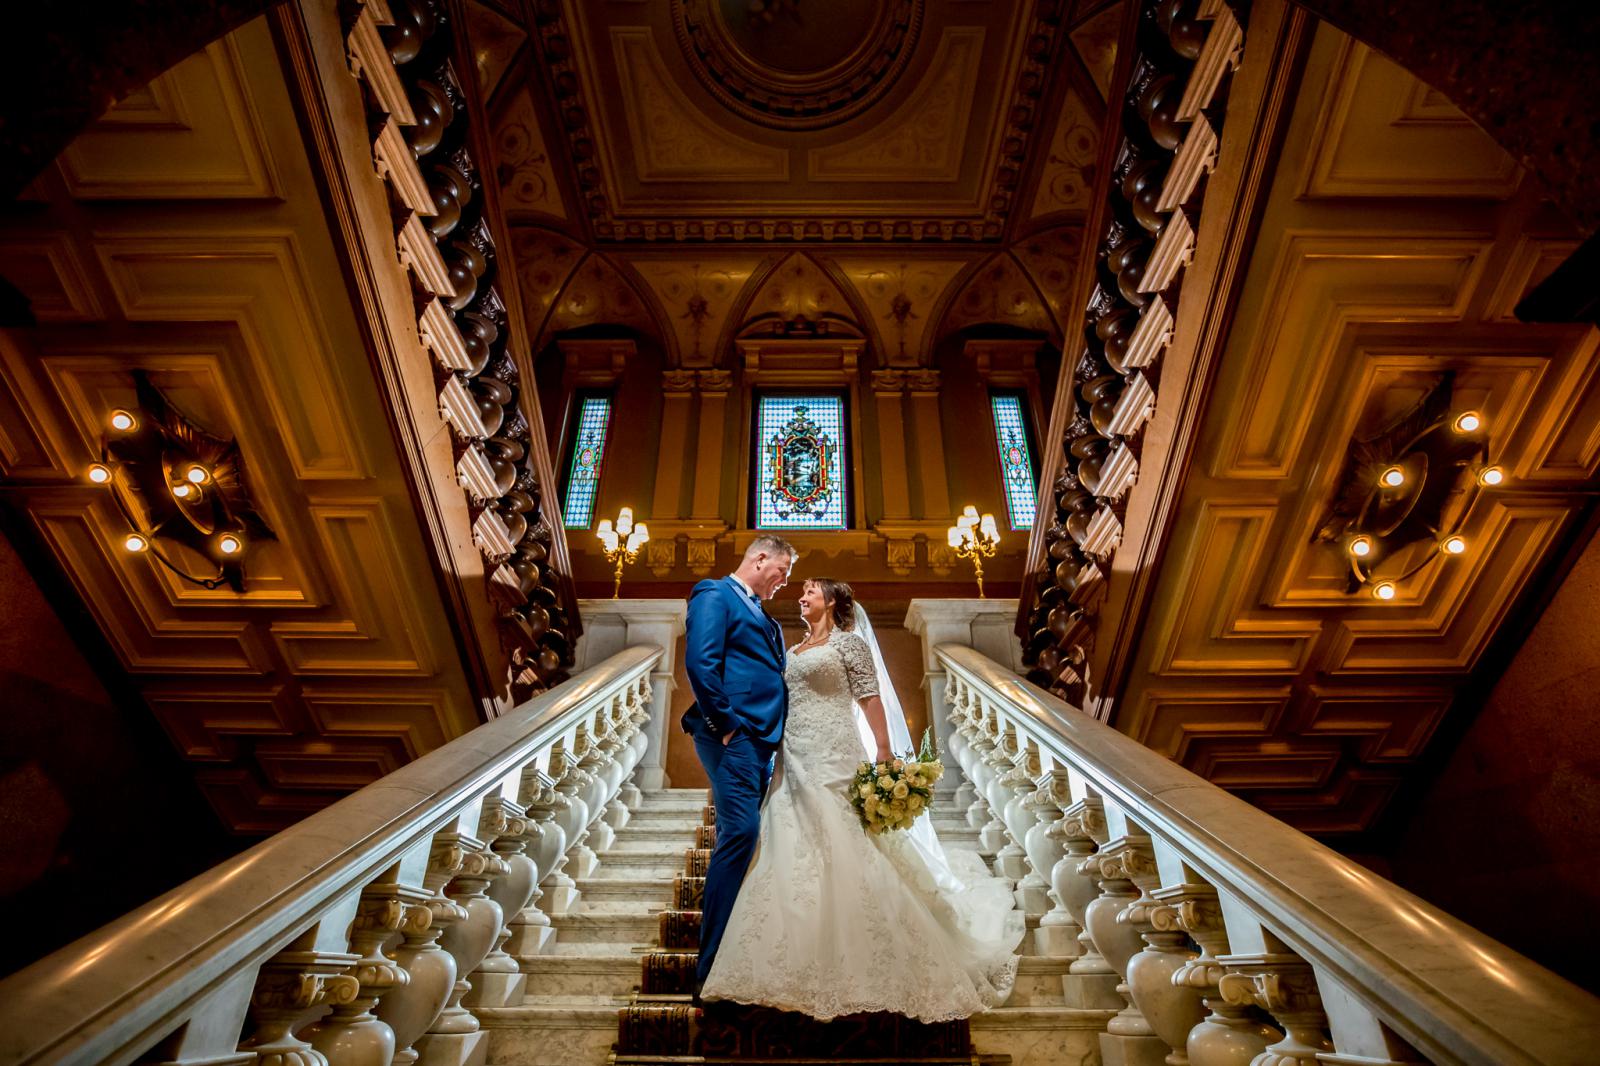 Internationale Award winning fotoshoot met bruidspaar bij kasteel oud wassenaar